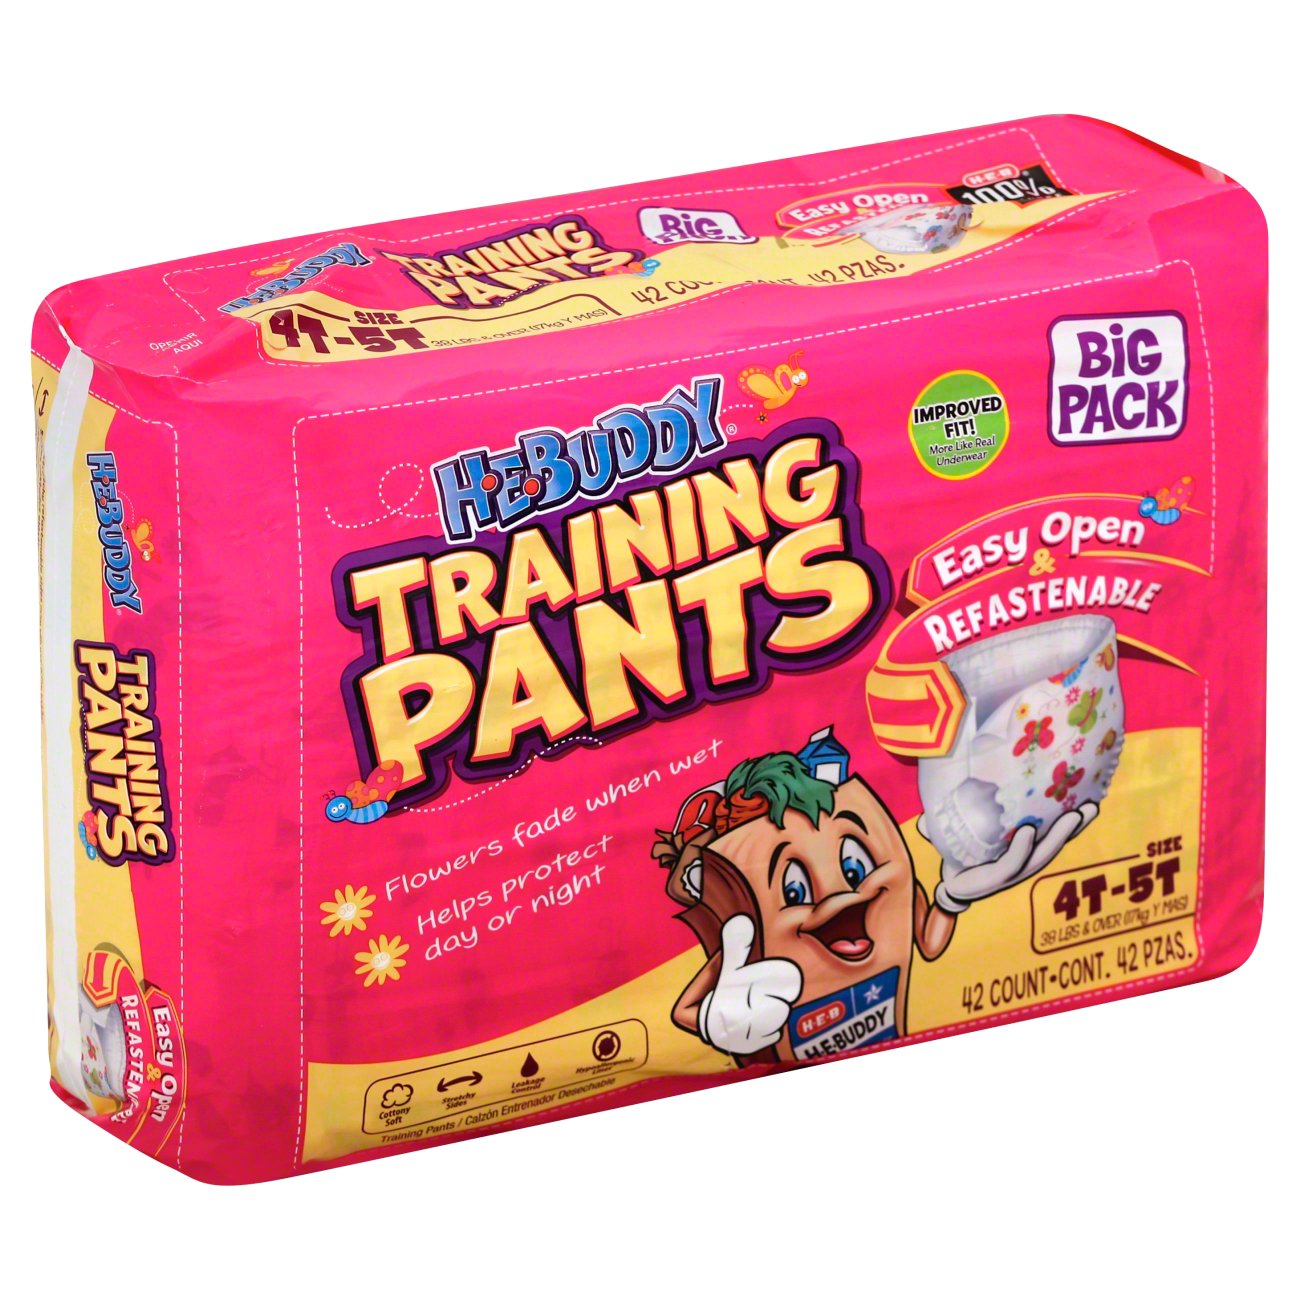 Pull-Ups Girls' Potty Training Pants - 4T-5T - Shop Training Pants at H-E-B